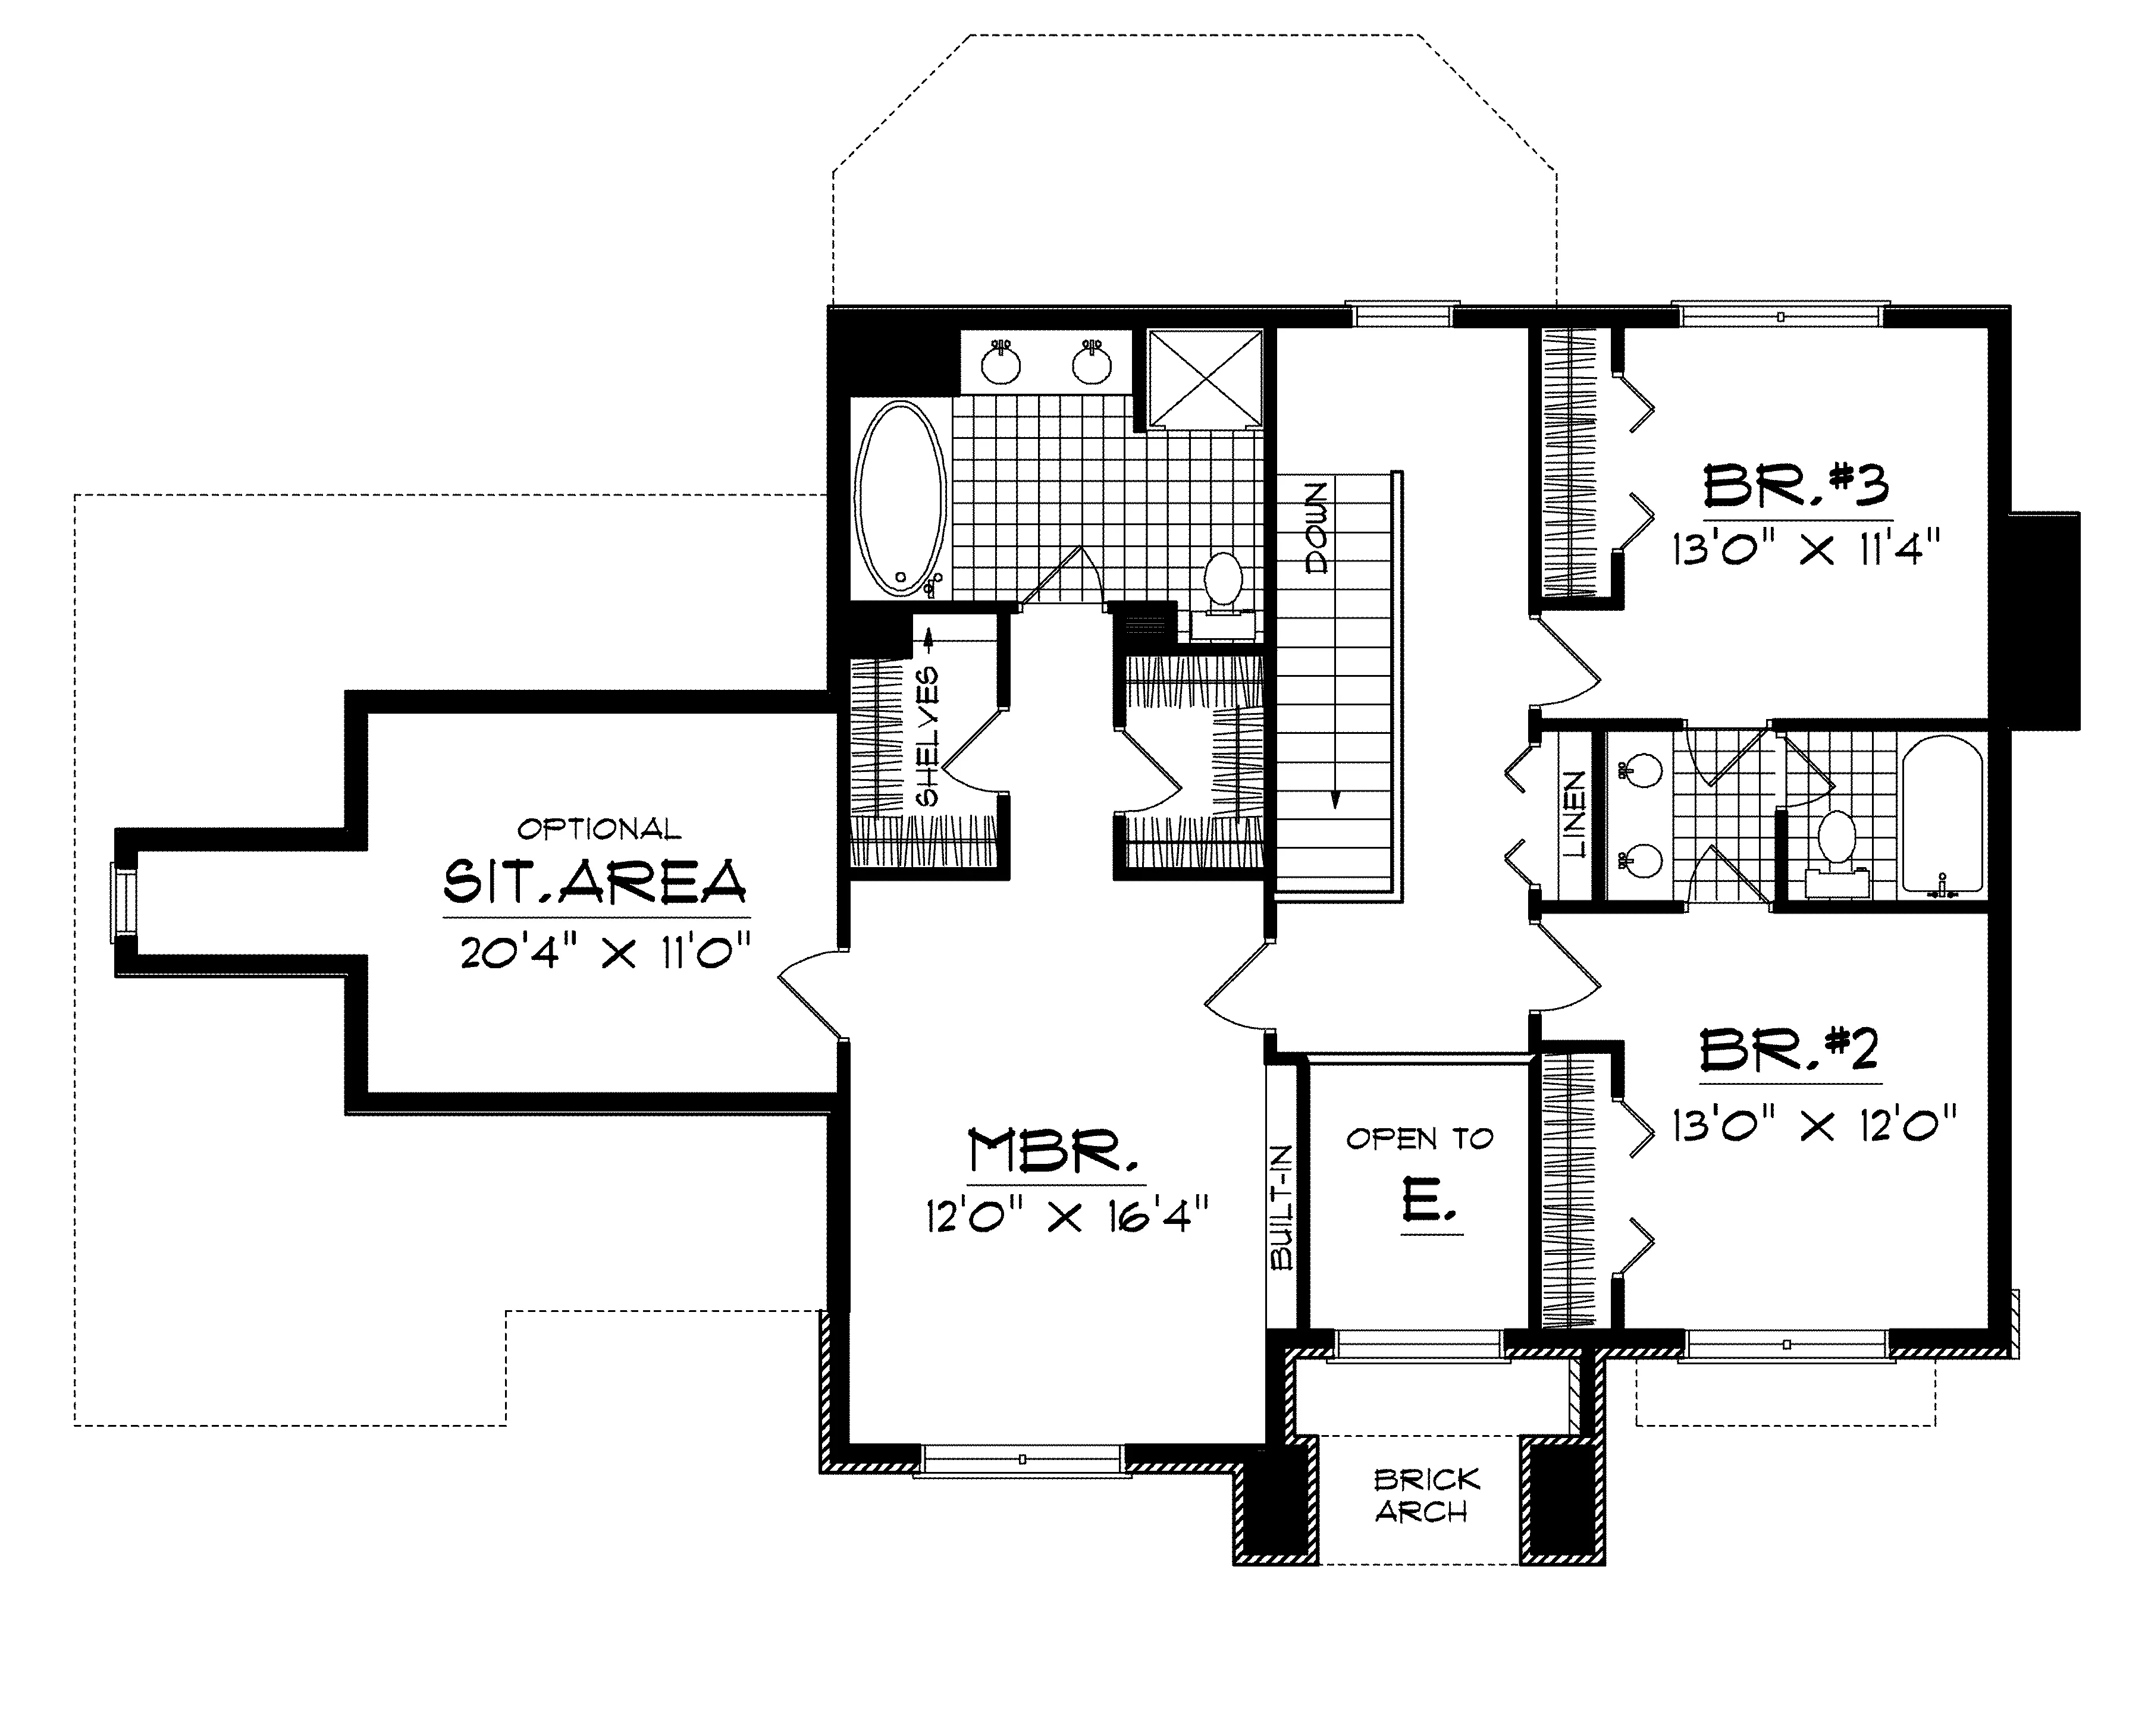 European House Plan Second Floor - Vista Brook European Home 051D-0216 - Shop House Plans and More